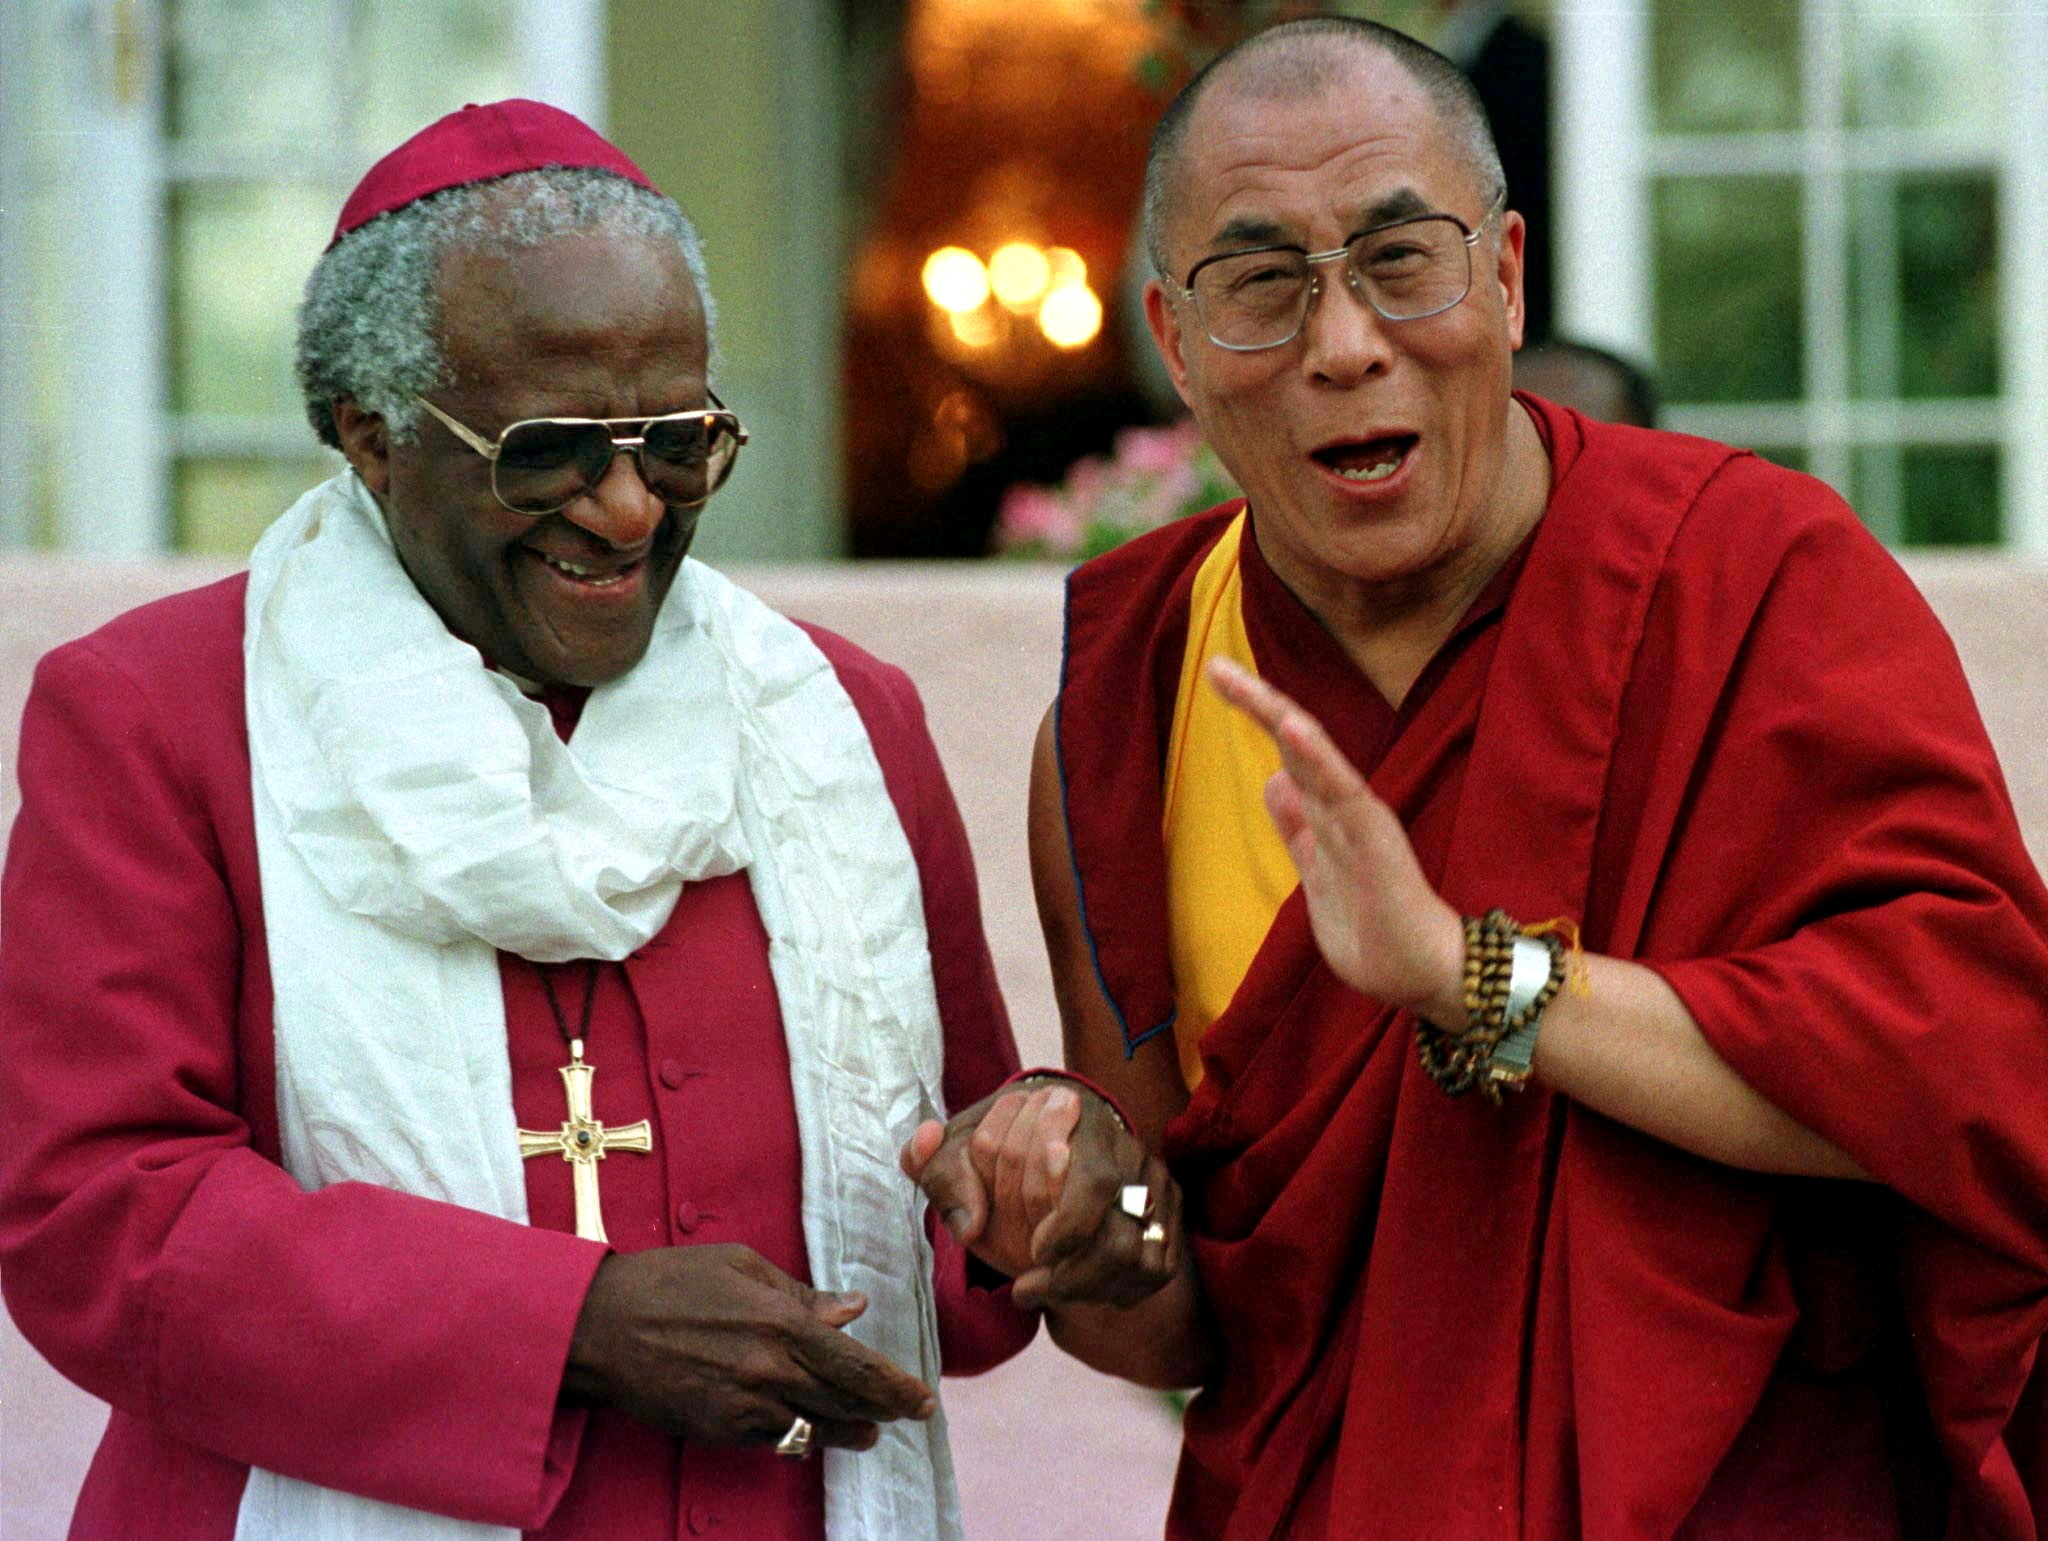 Archbishop Desmond Tutu shares a joke with the Dalai Lama after their meeting, August 21. The Dalai ..